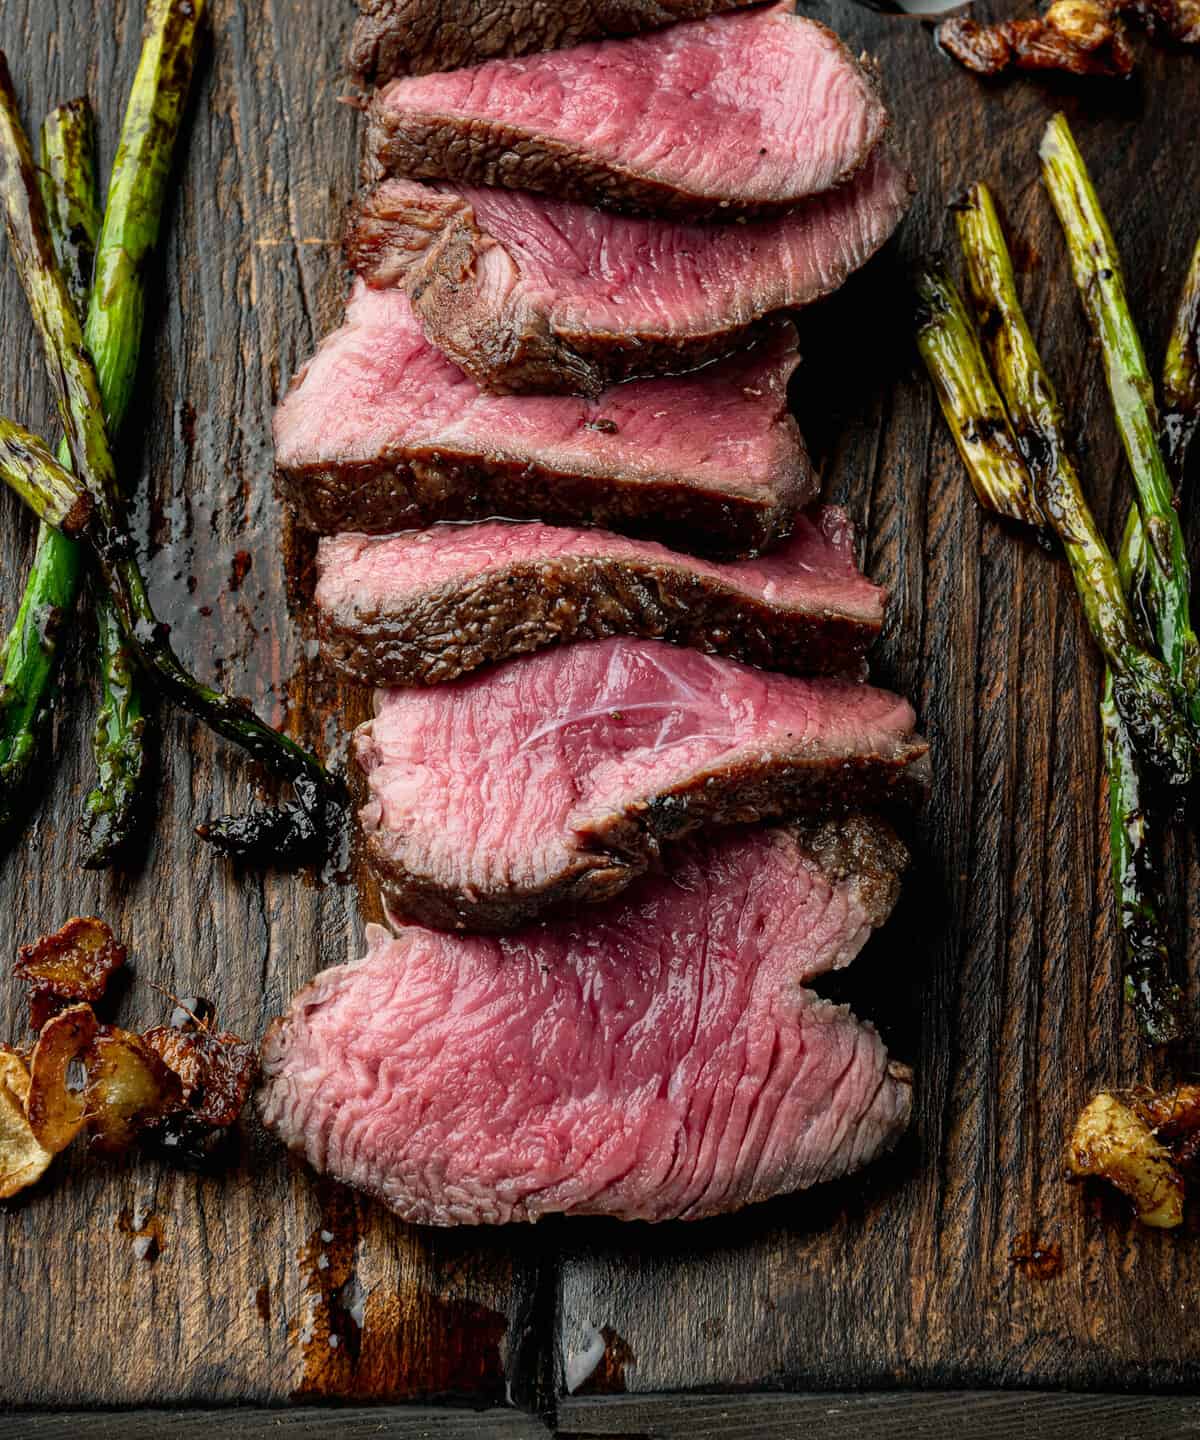 Medium rare beef steak set, tenderloin or fillet mignon cut, on wooden serving board